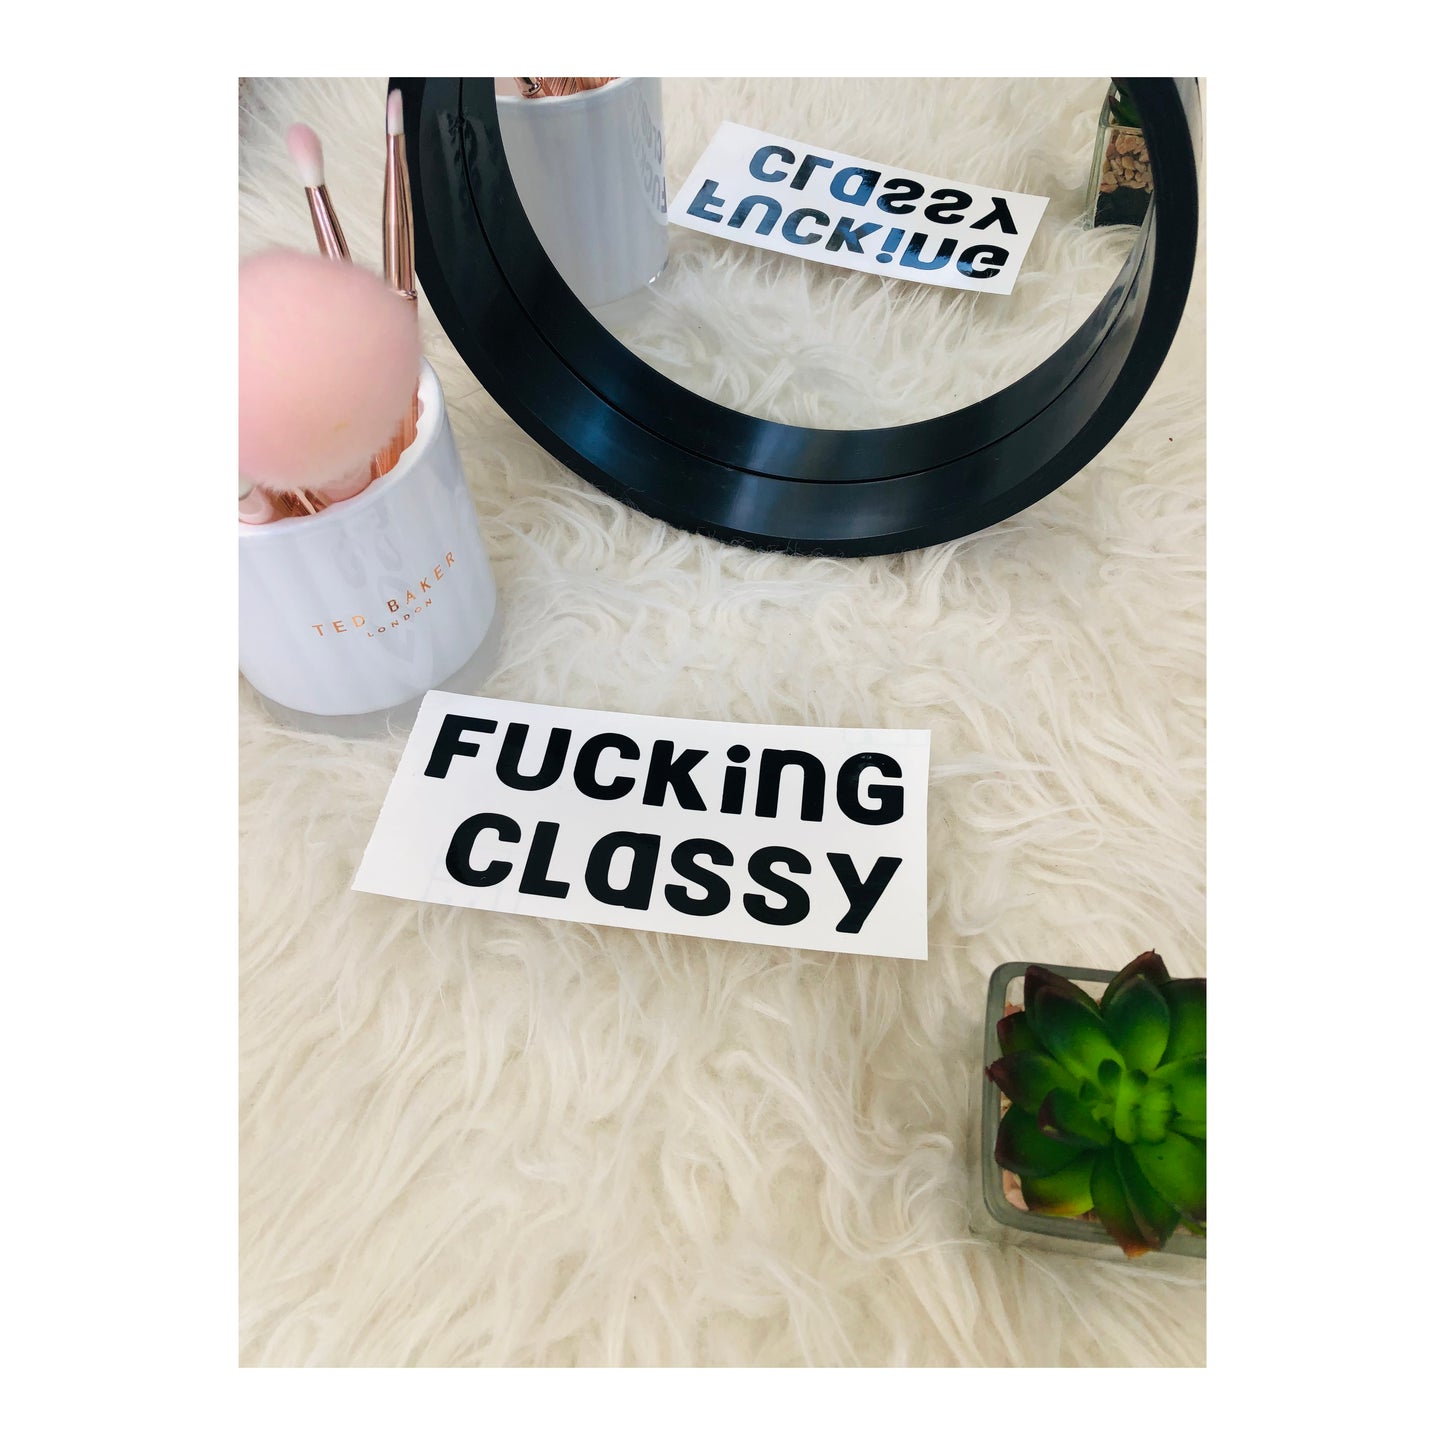 Fucking Classy Mirror Decal